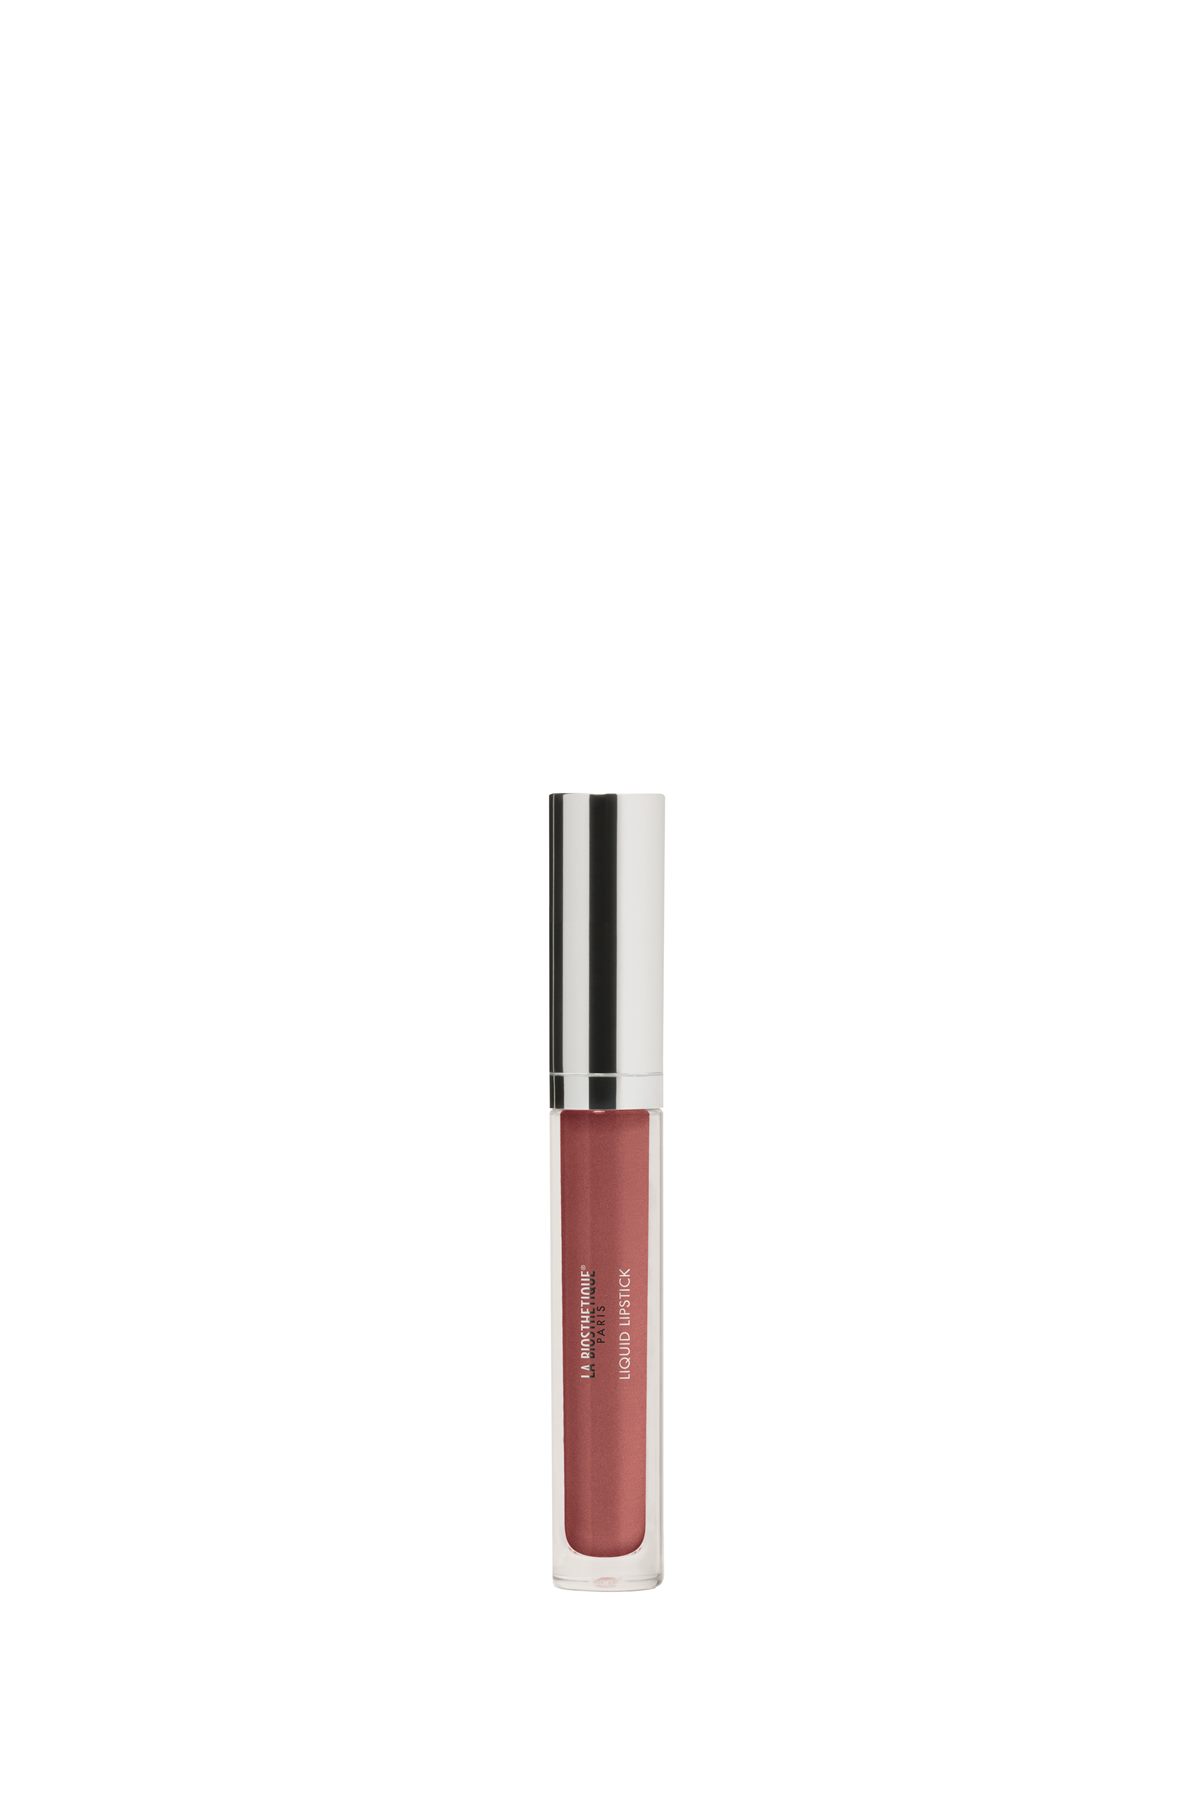 La Biosthétique_Liquid Lipstick_Satin Rose_EUR 21,50